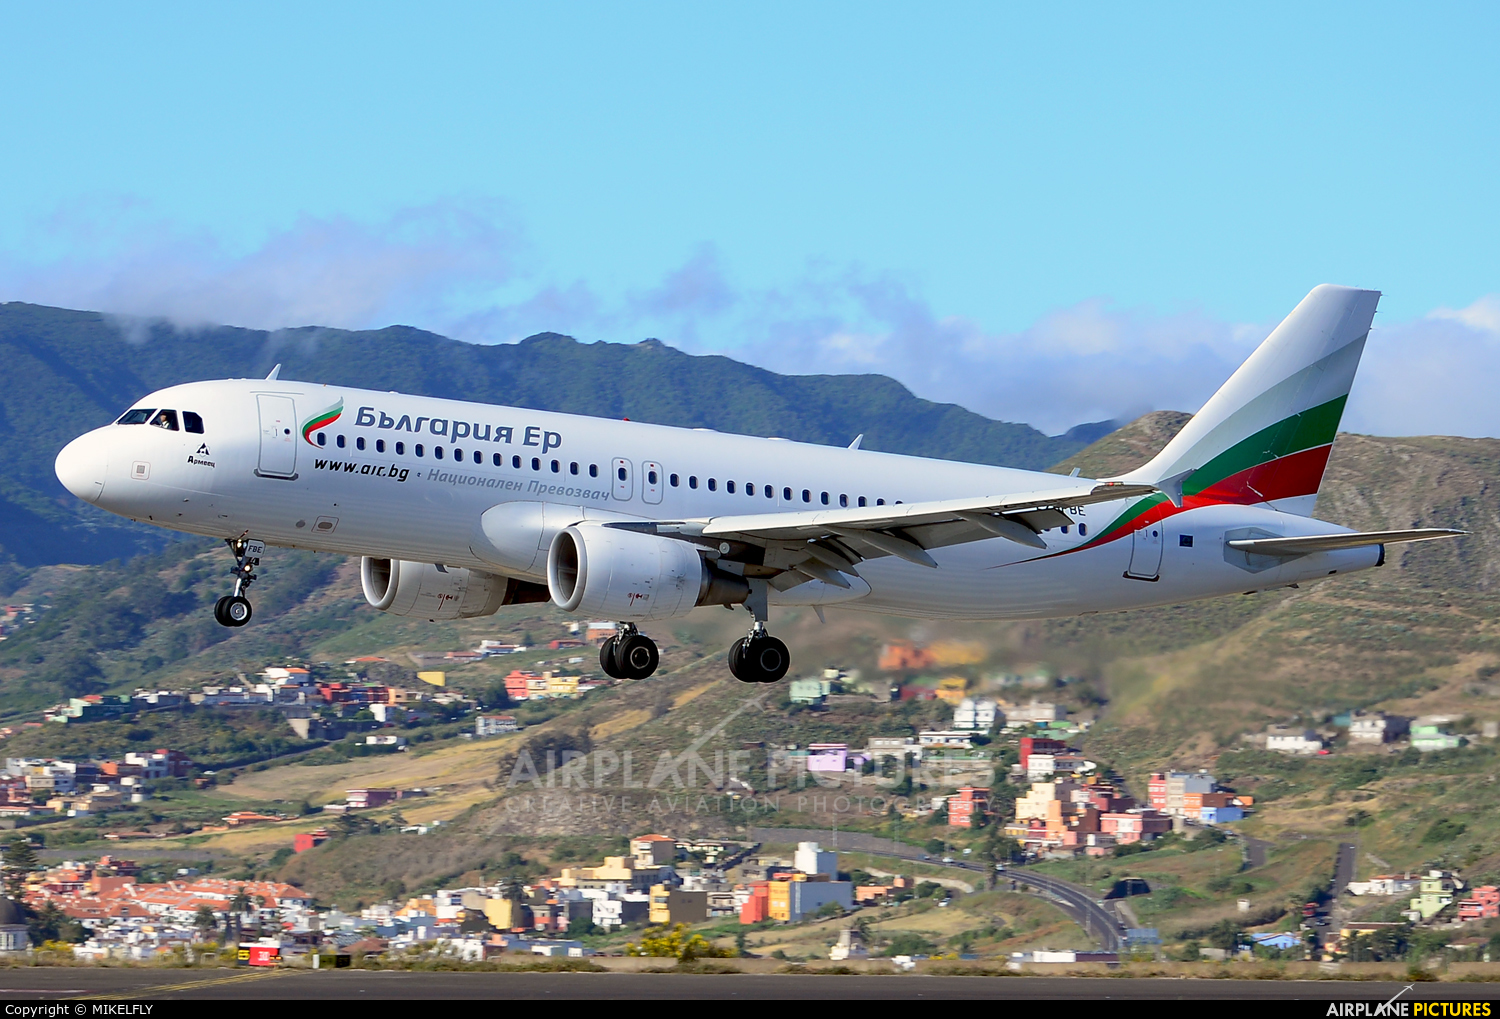 Bulgaria Air LZ-FBE aircraft at Tenerife Norte - Los Rodeos